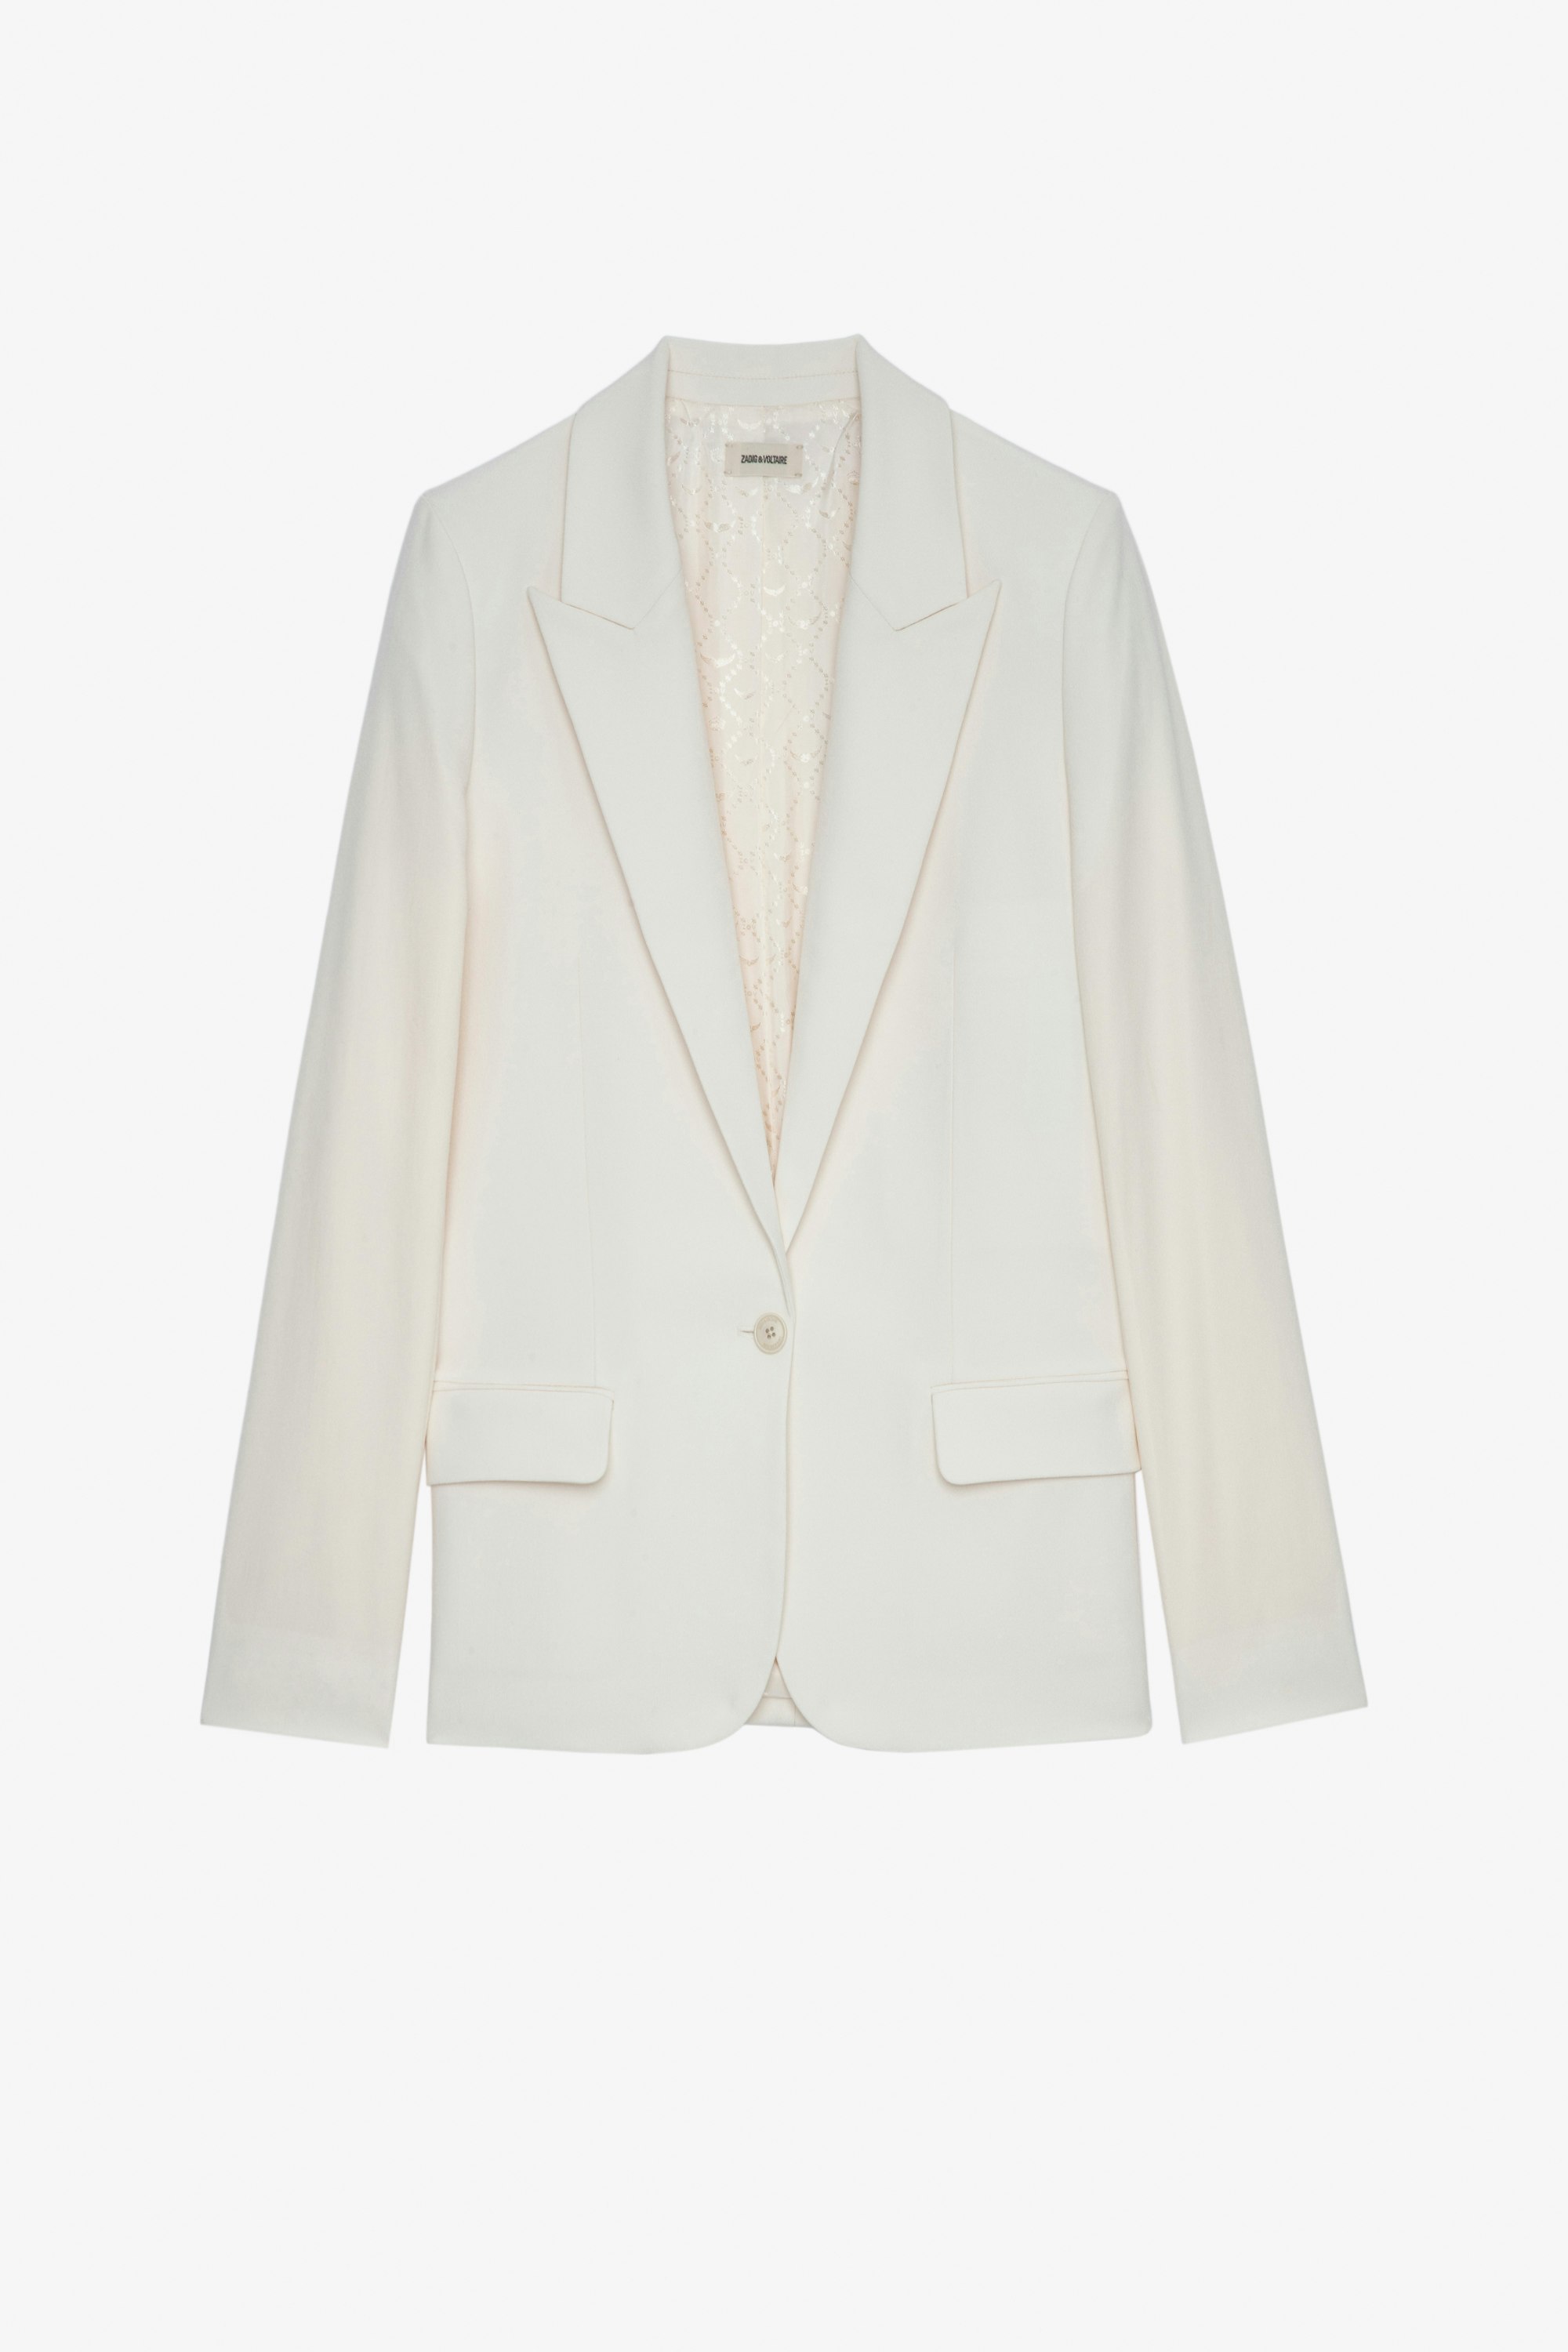 Voyage Blazer Women’s white tailored jacket